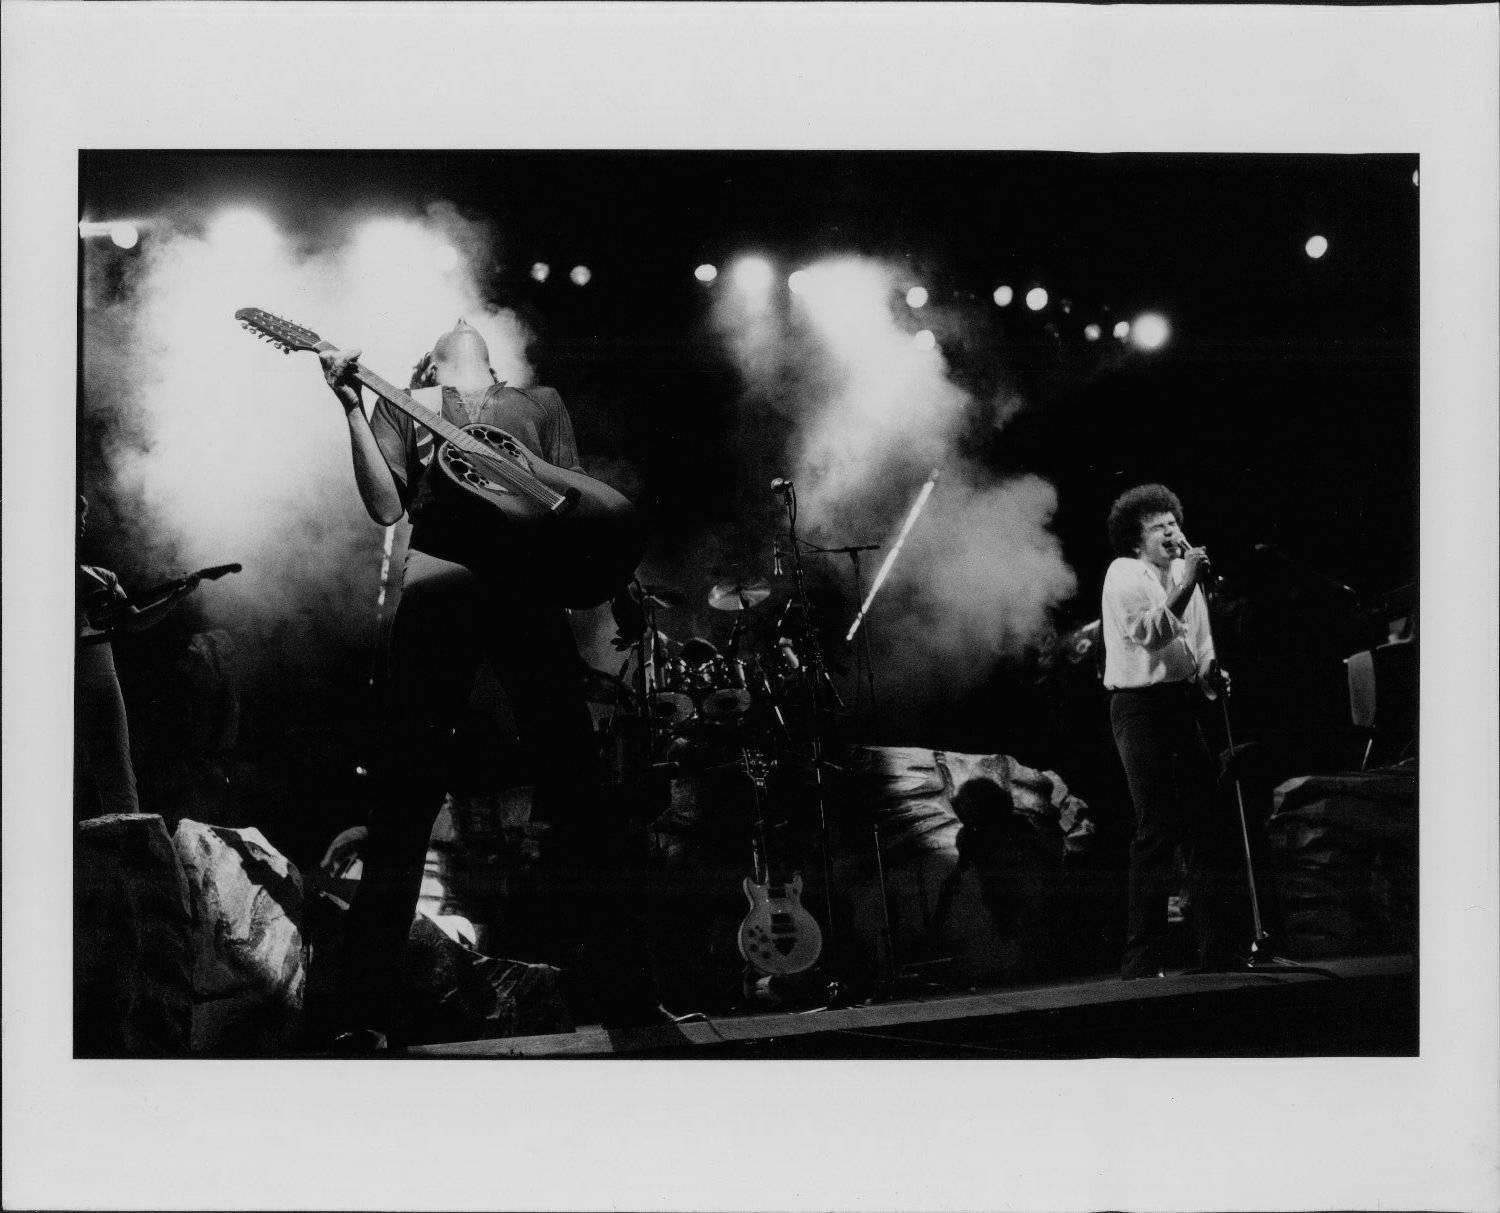 Neal Preston Portrait Photograph - Air Supply in Concert Vintage Original Photograph